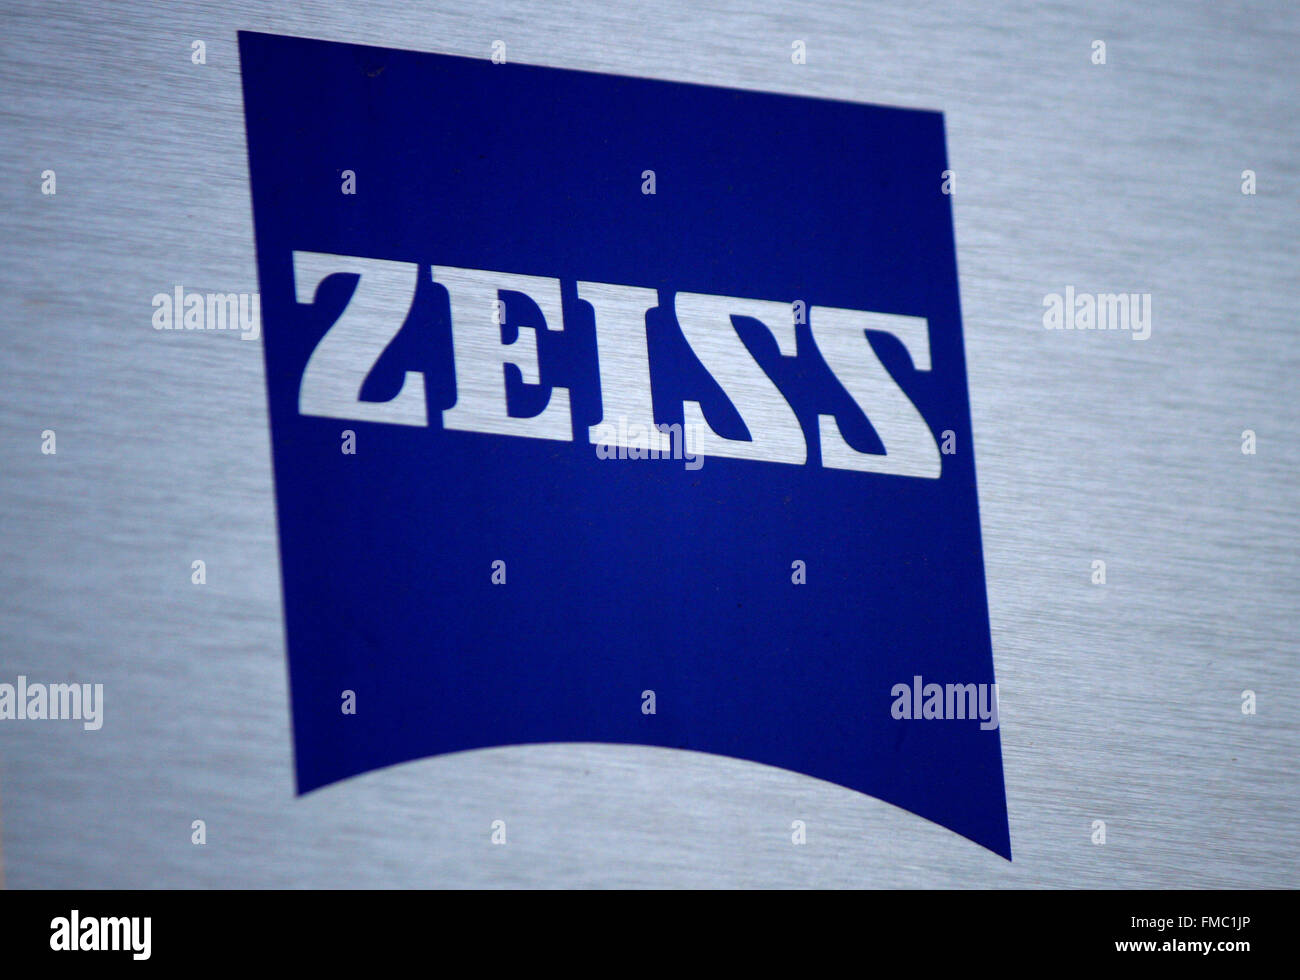 Markenname: "Zeiss", Berlin. Stockfoto